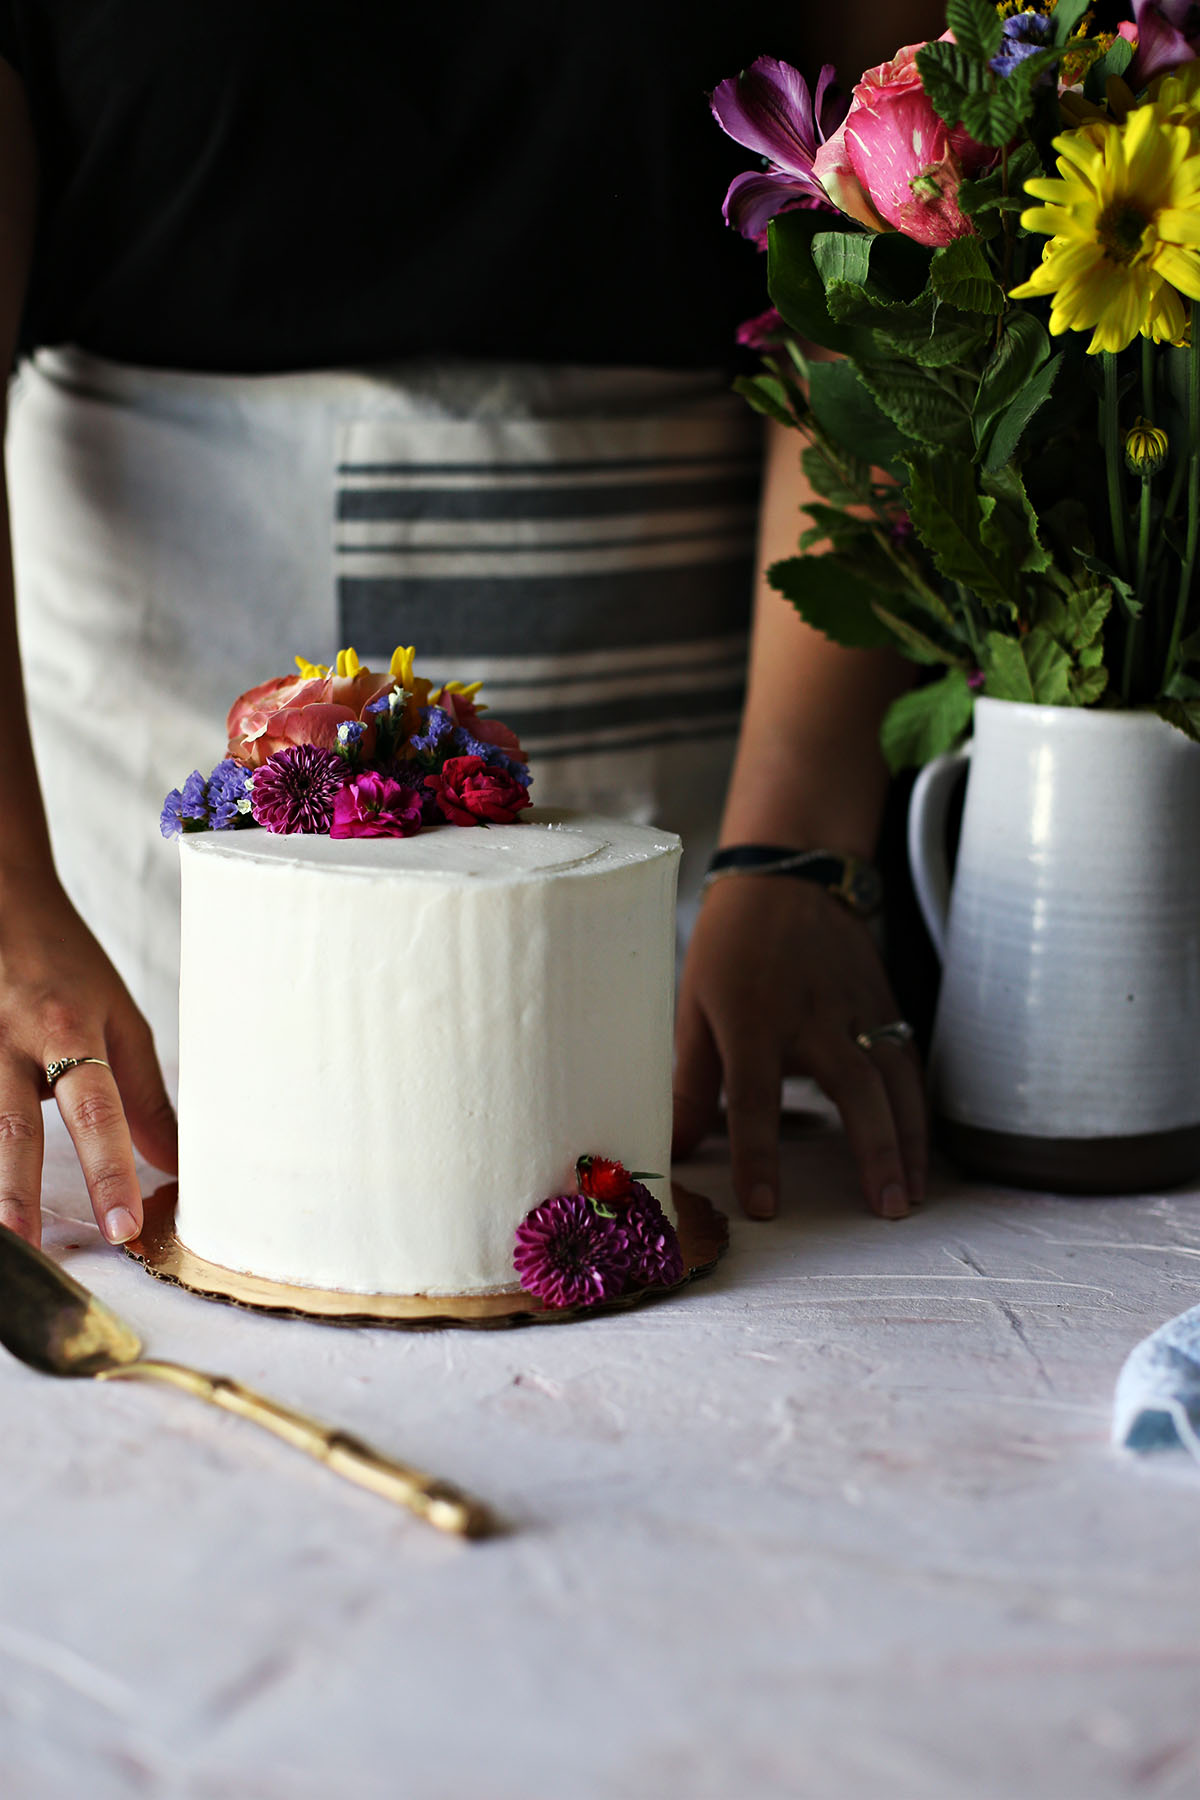 color floral tape for Artificial flowers fondant cake flower